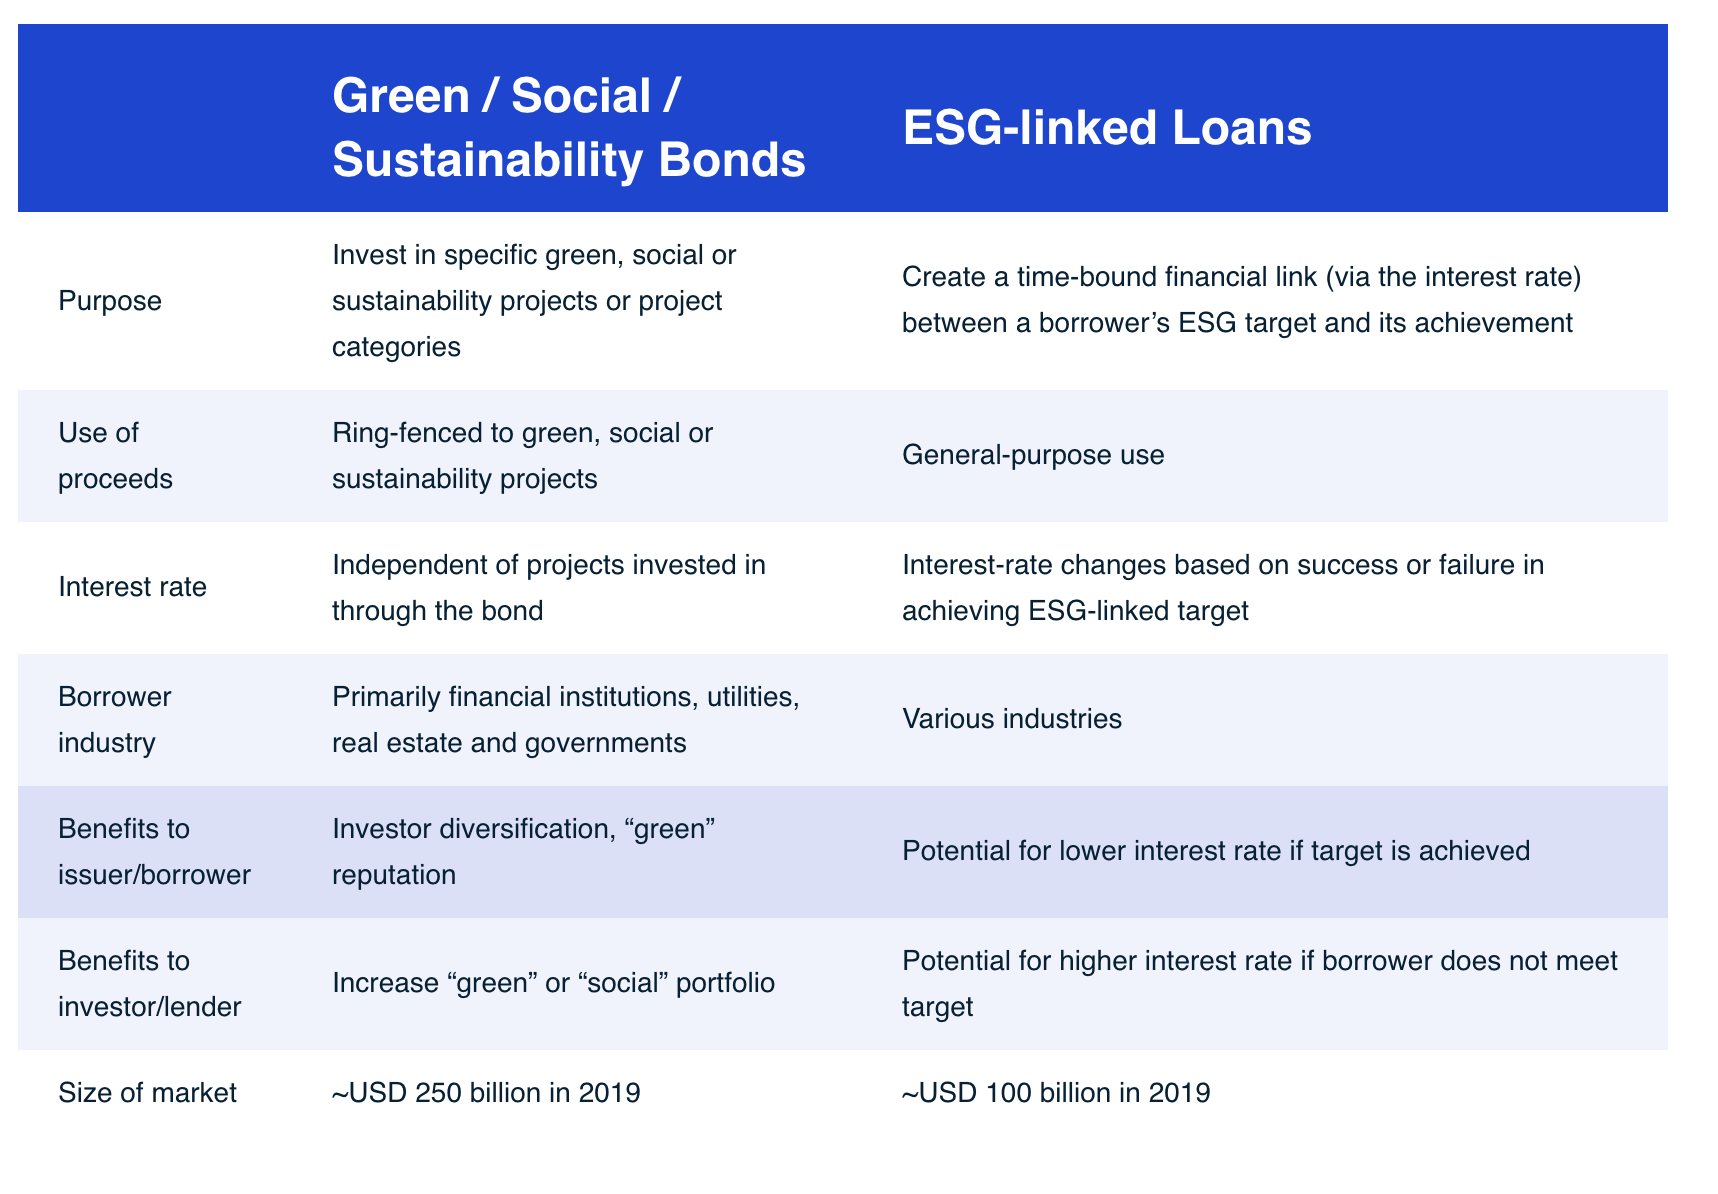 ESG-linked loans versus green bonds